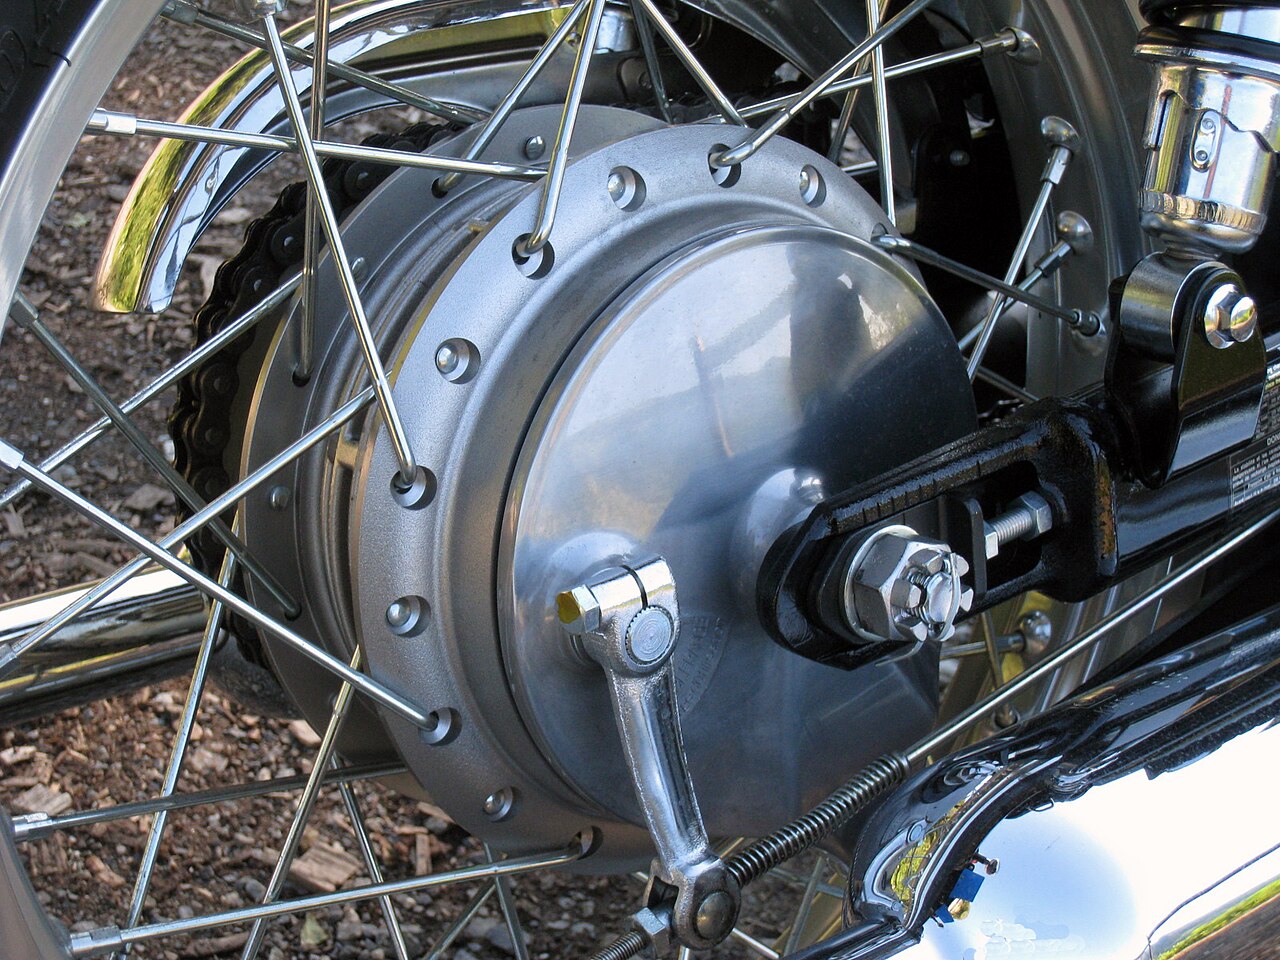 File:W800 drum brake.jpg - Wikipedia